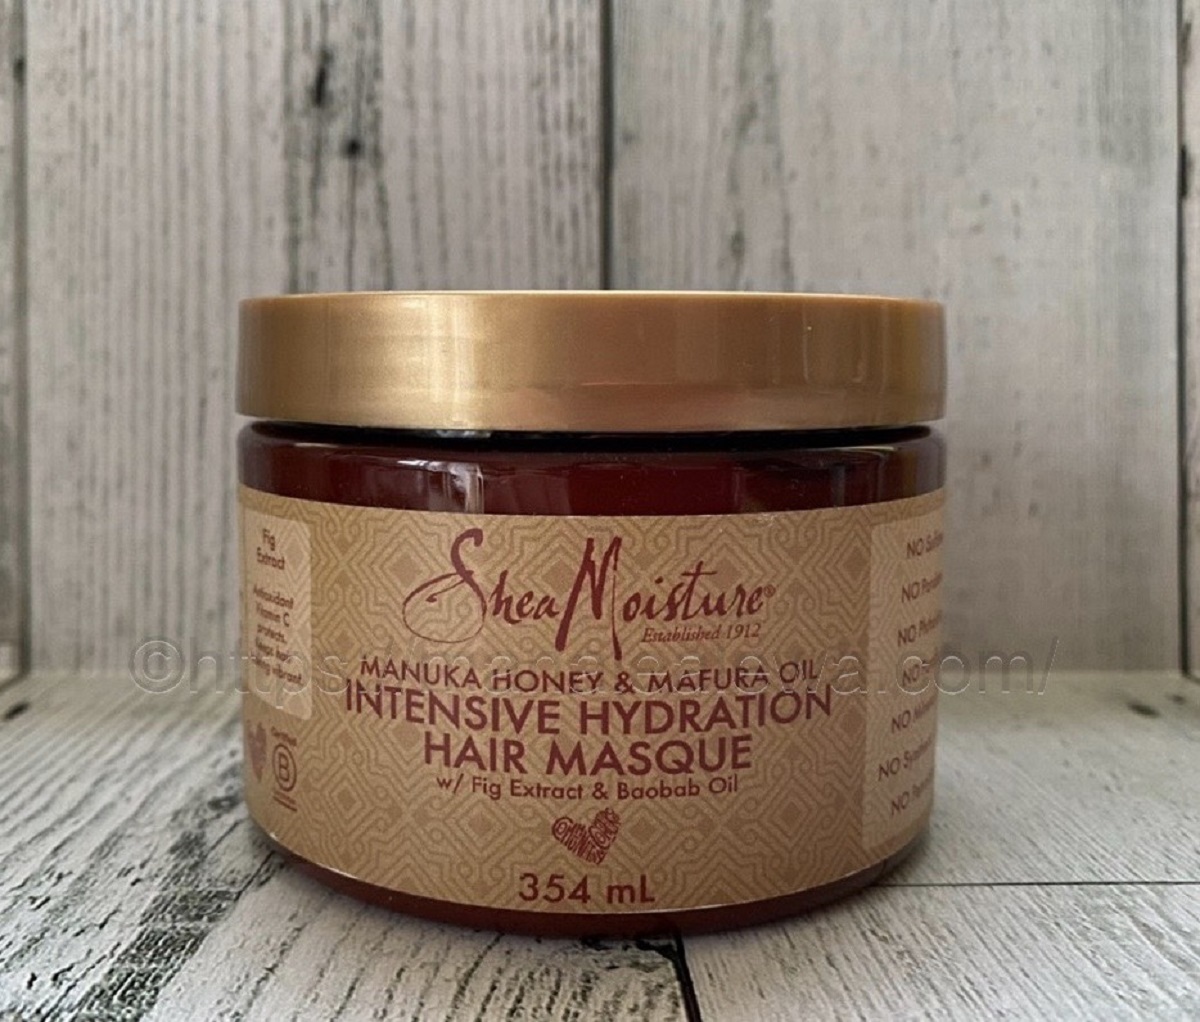 SheaMoisture-manuka-honey-mafura-oil-intensive-hydration-hair-masque